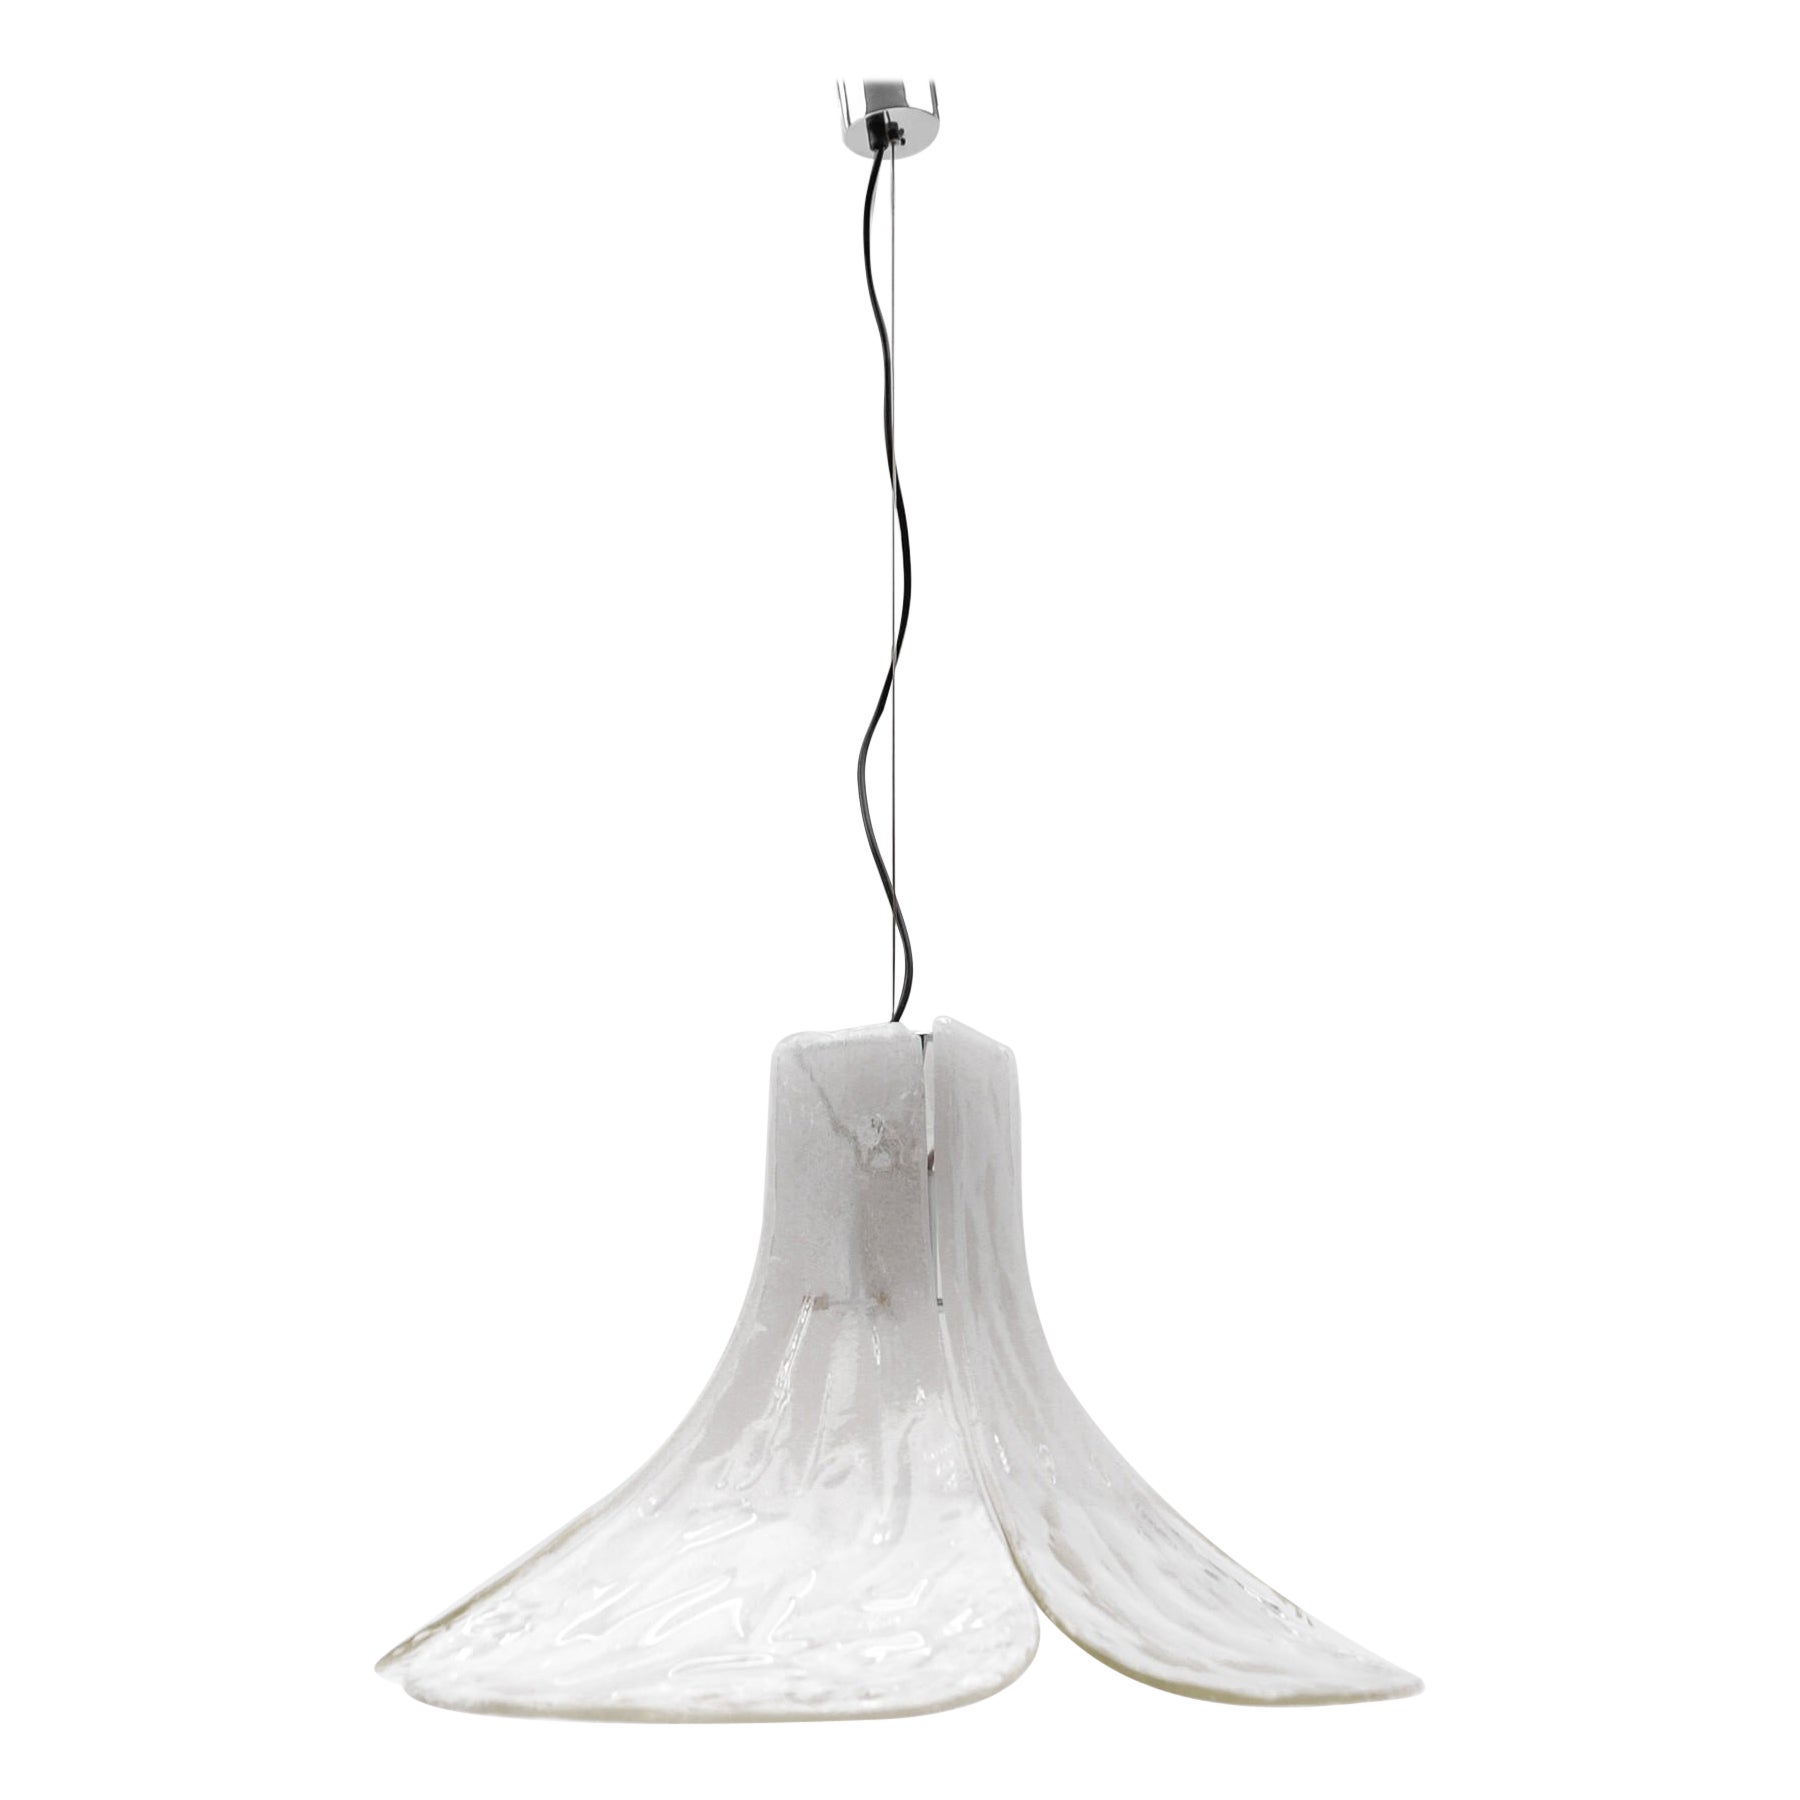 White Mazzega Pendant Lamp by Carlo Nason for J.T. Kalmar in Murano Glass, 1970s For Sale